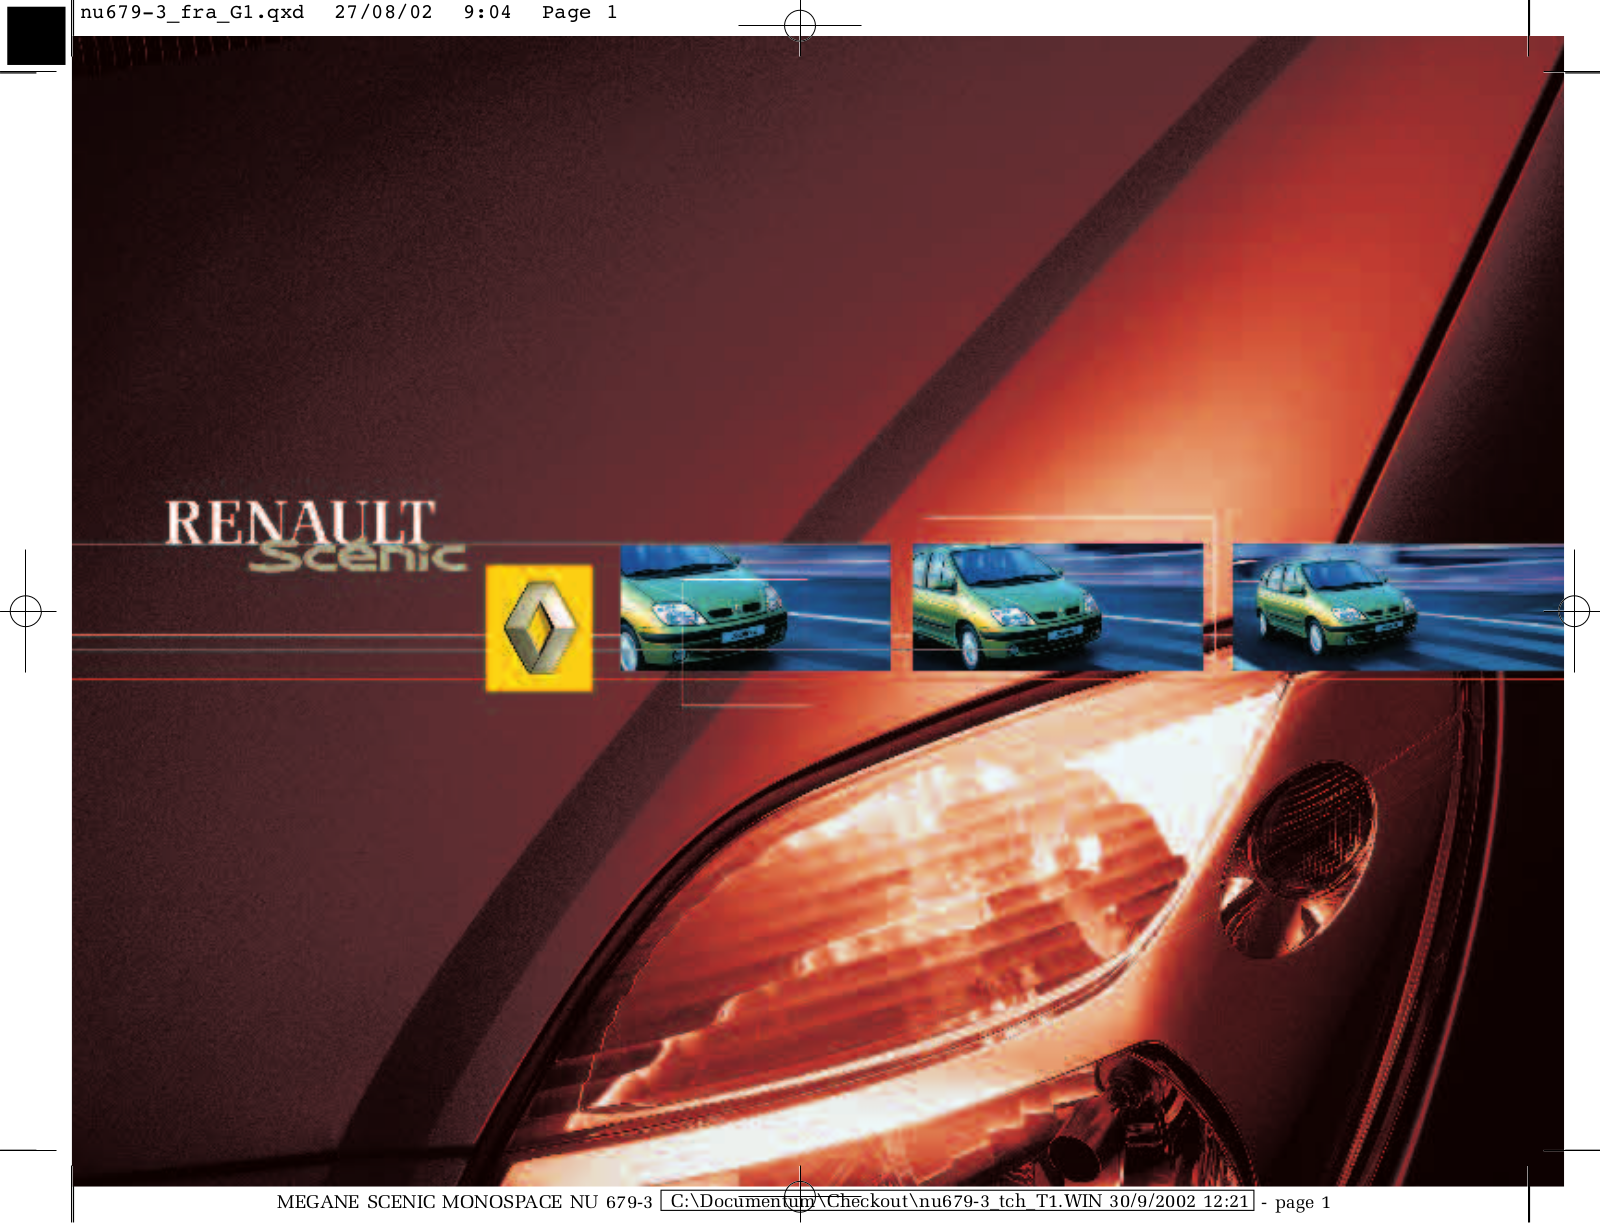 Renault Scénic 2002 User Manual